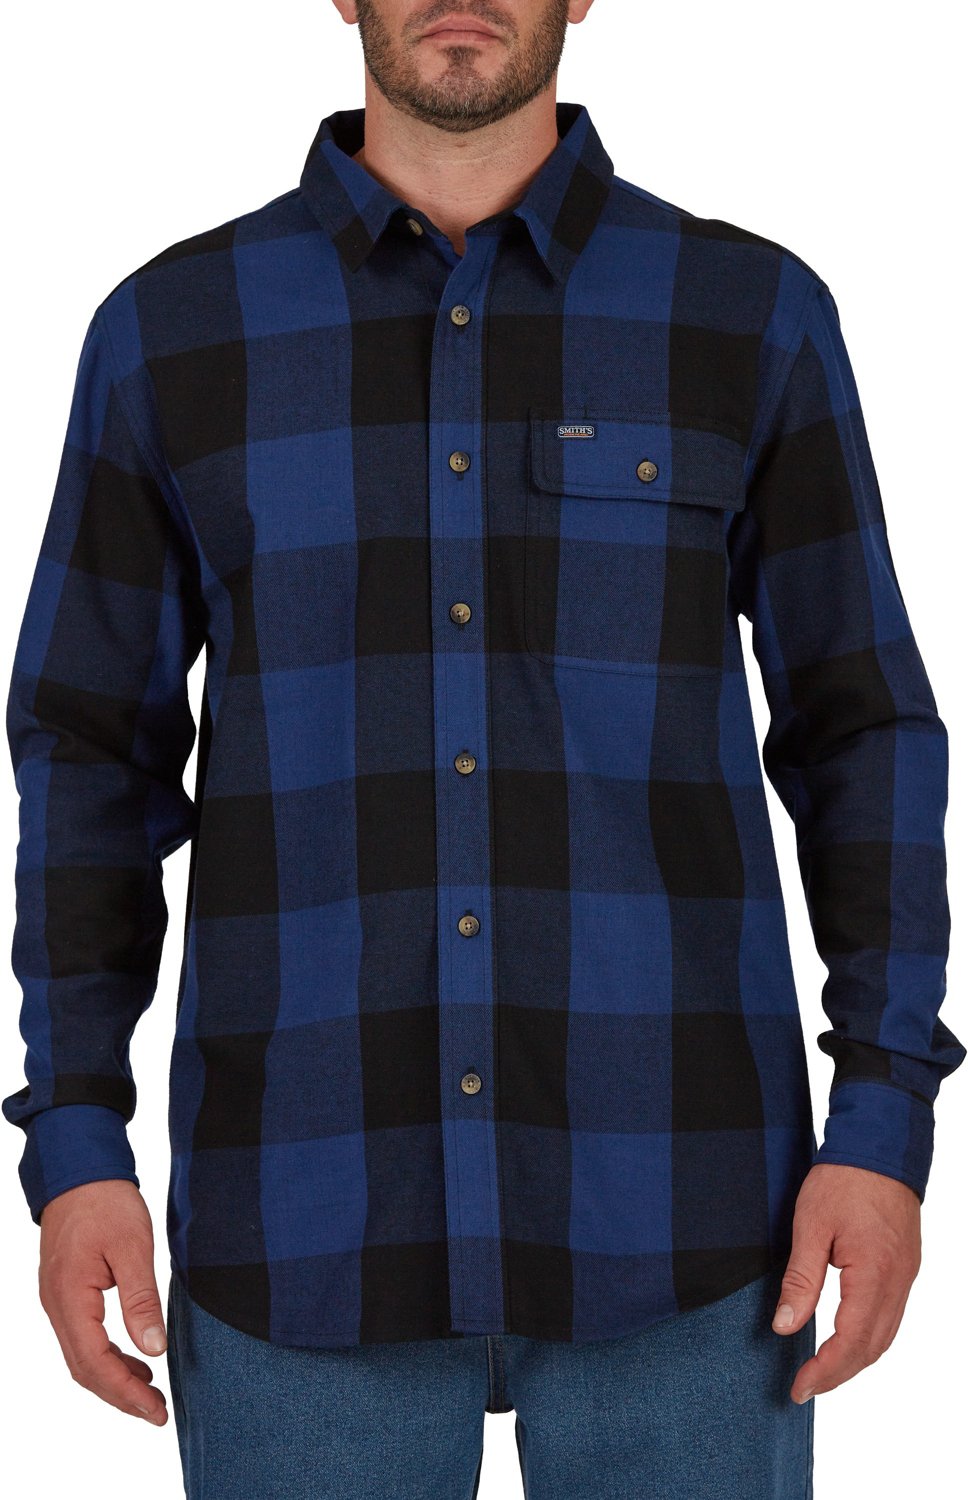 Smith's Workwear Men's 2 Pocket Flannel Button Down Shirt